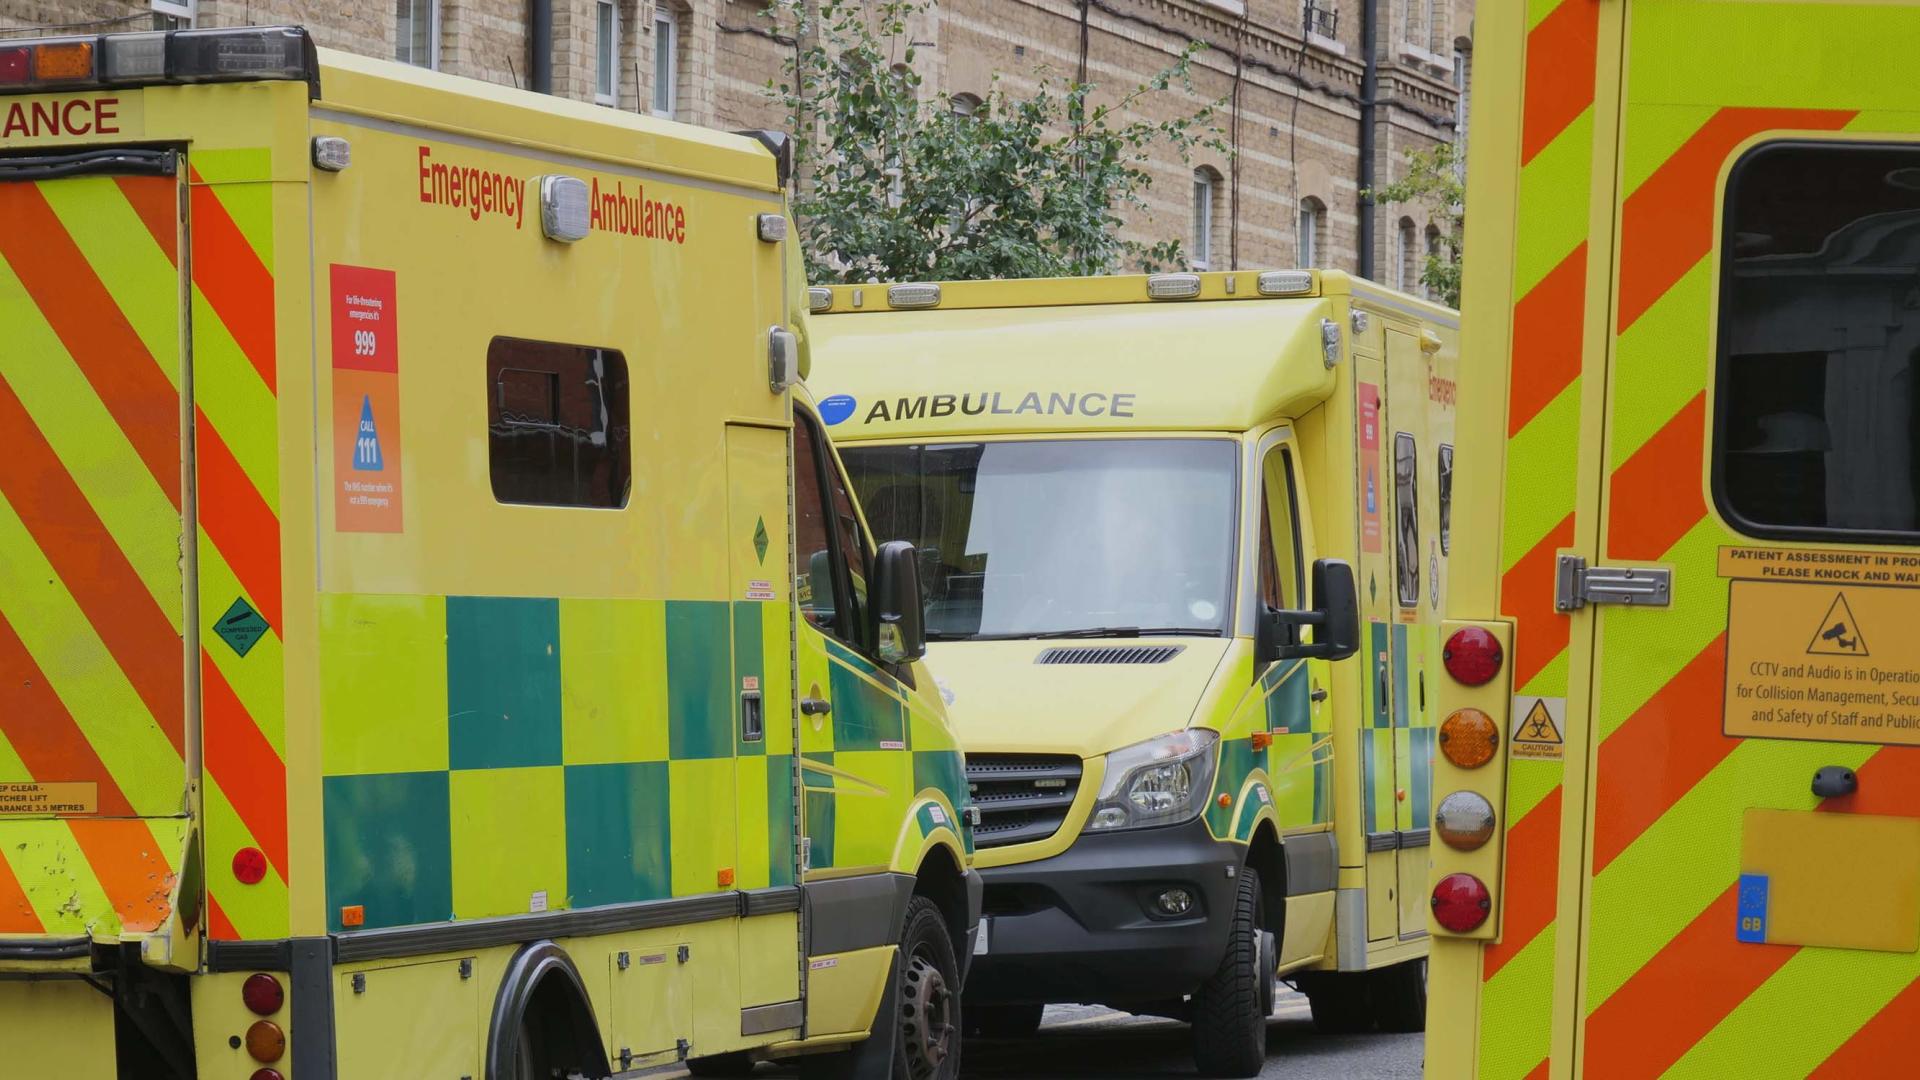 Three ambulances